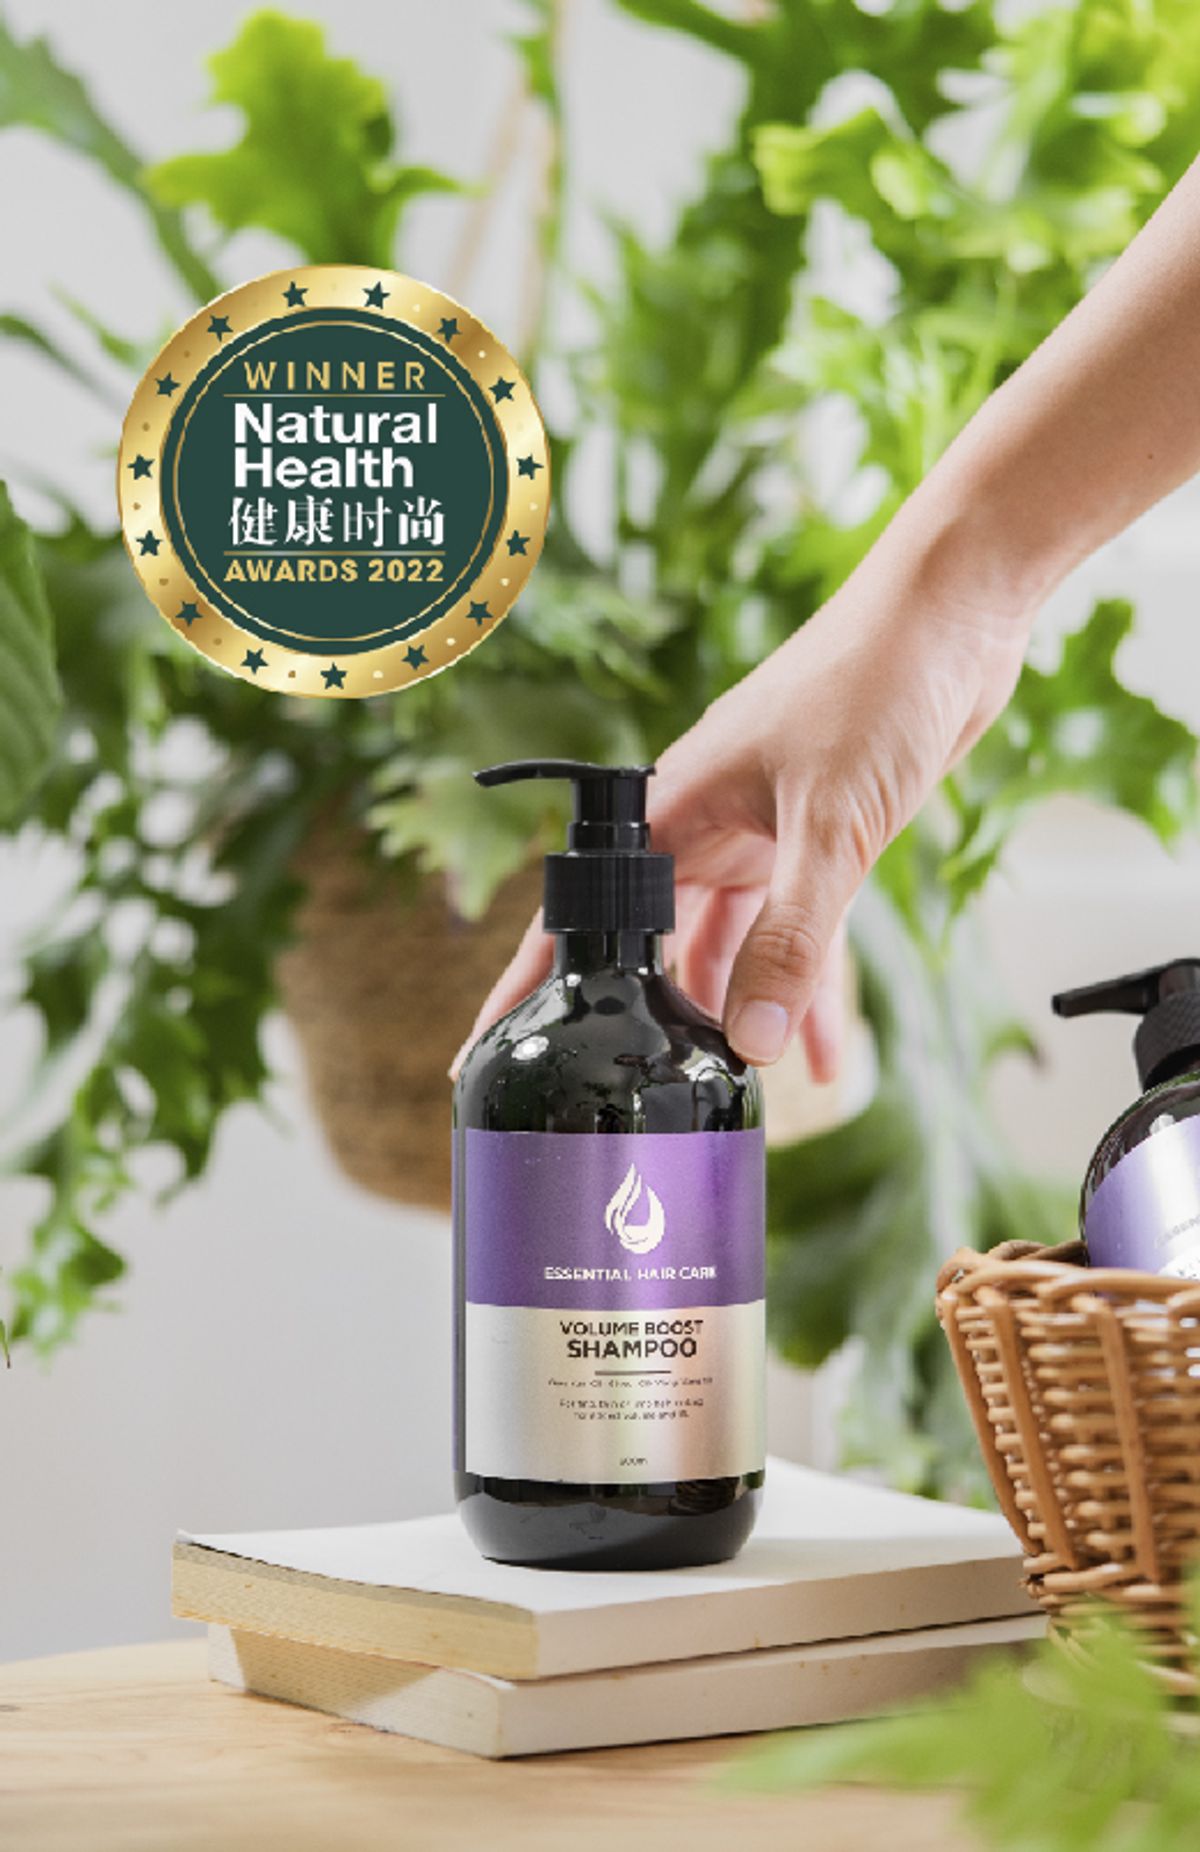 Winner of Natural Health Awards 2022 - Essential Hair Care Volume Boost Shampoo 【 防脱发洗发水 】